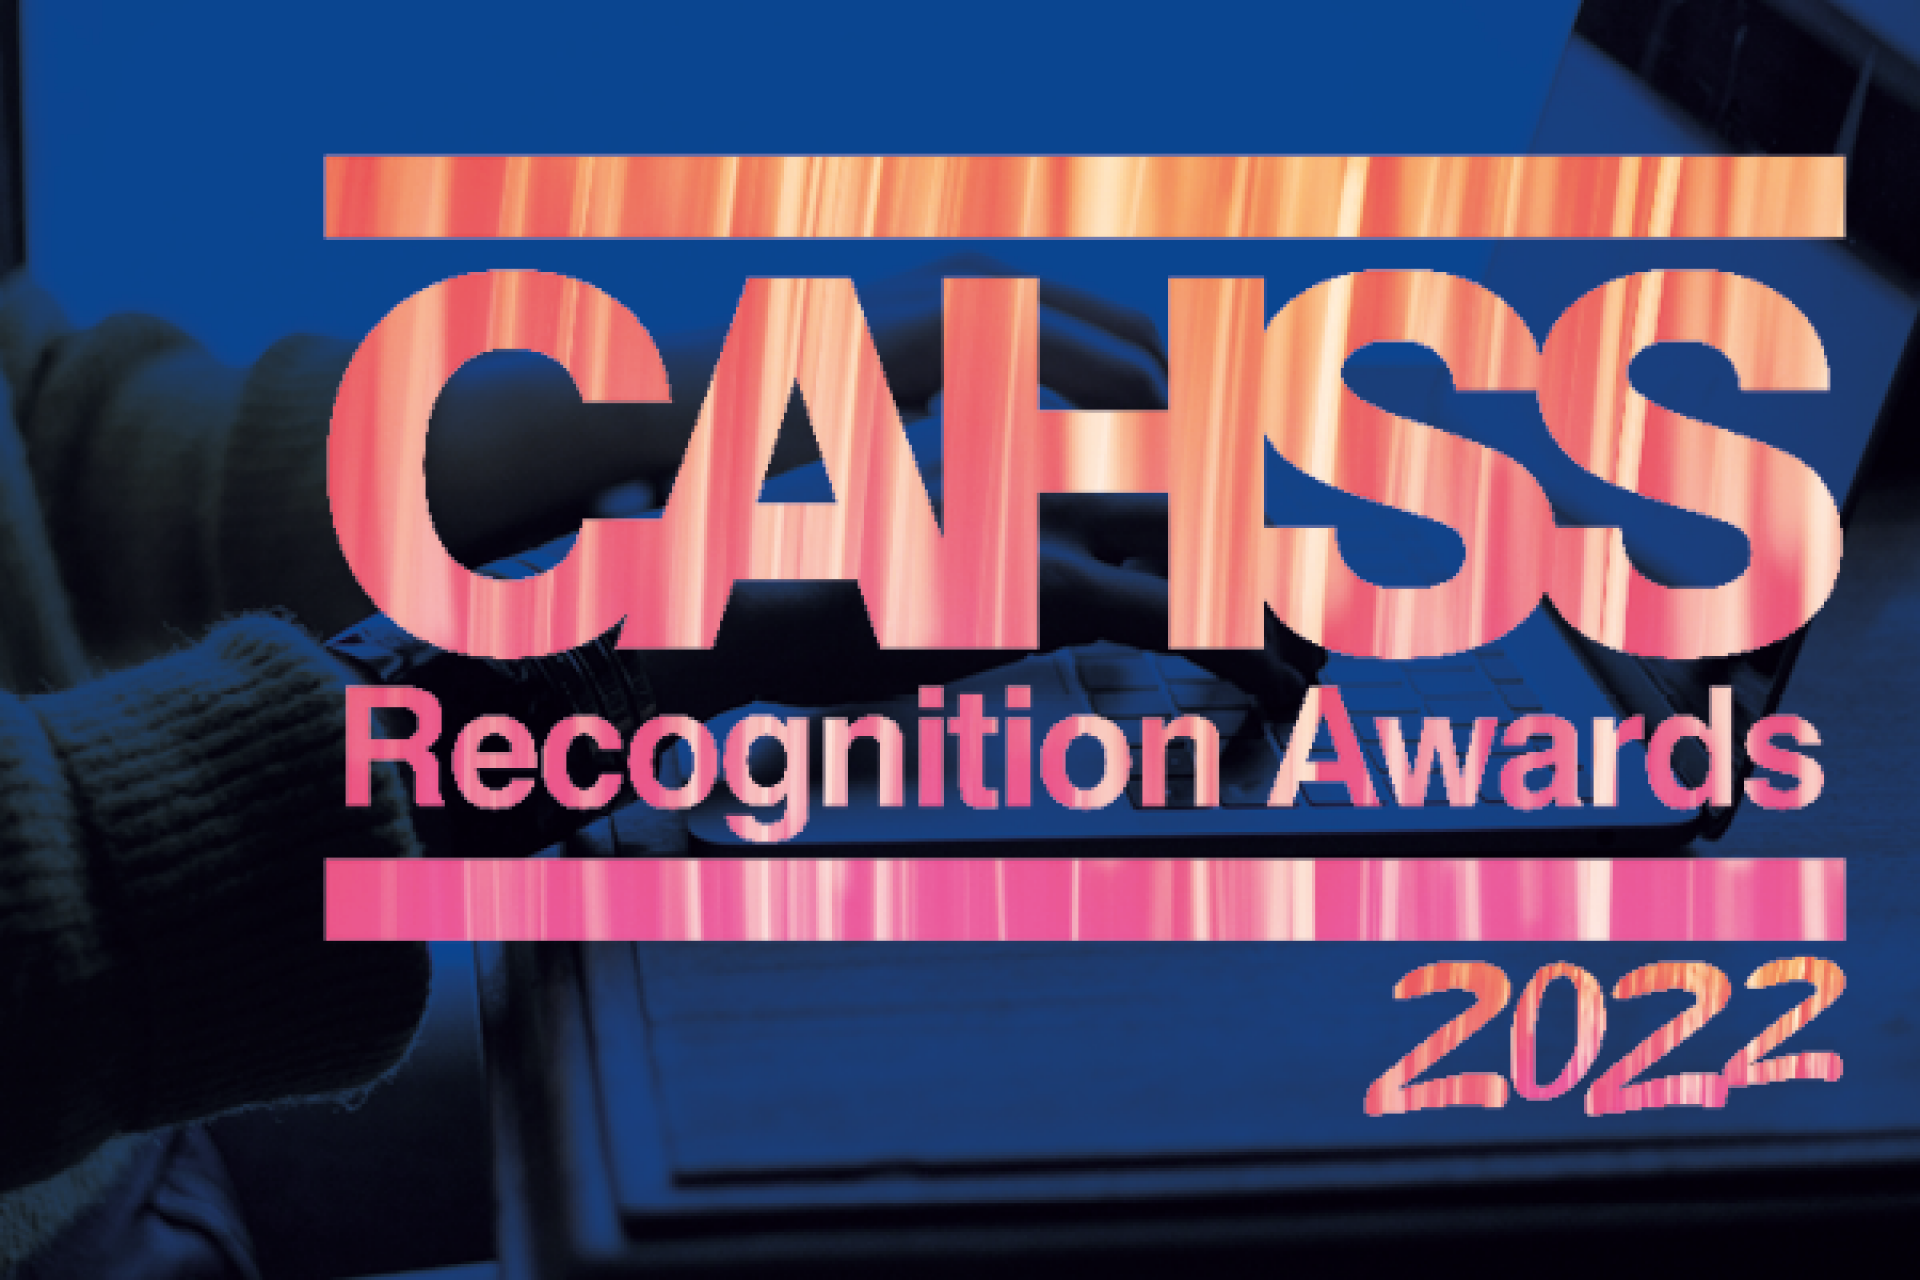 CAHSS recognition awards logo